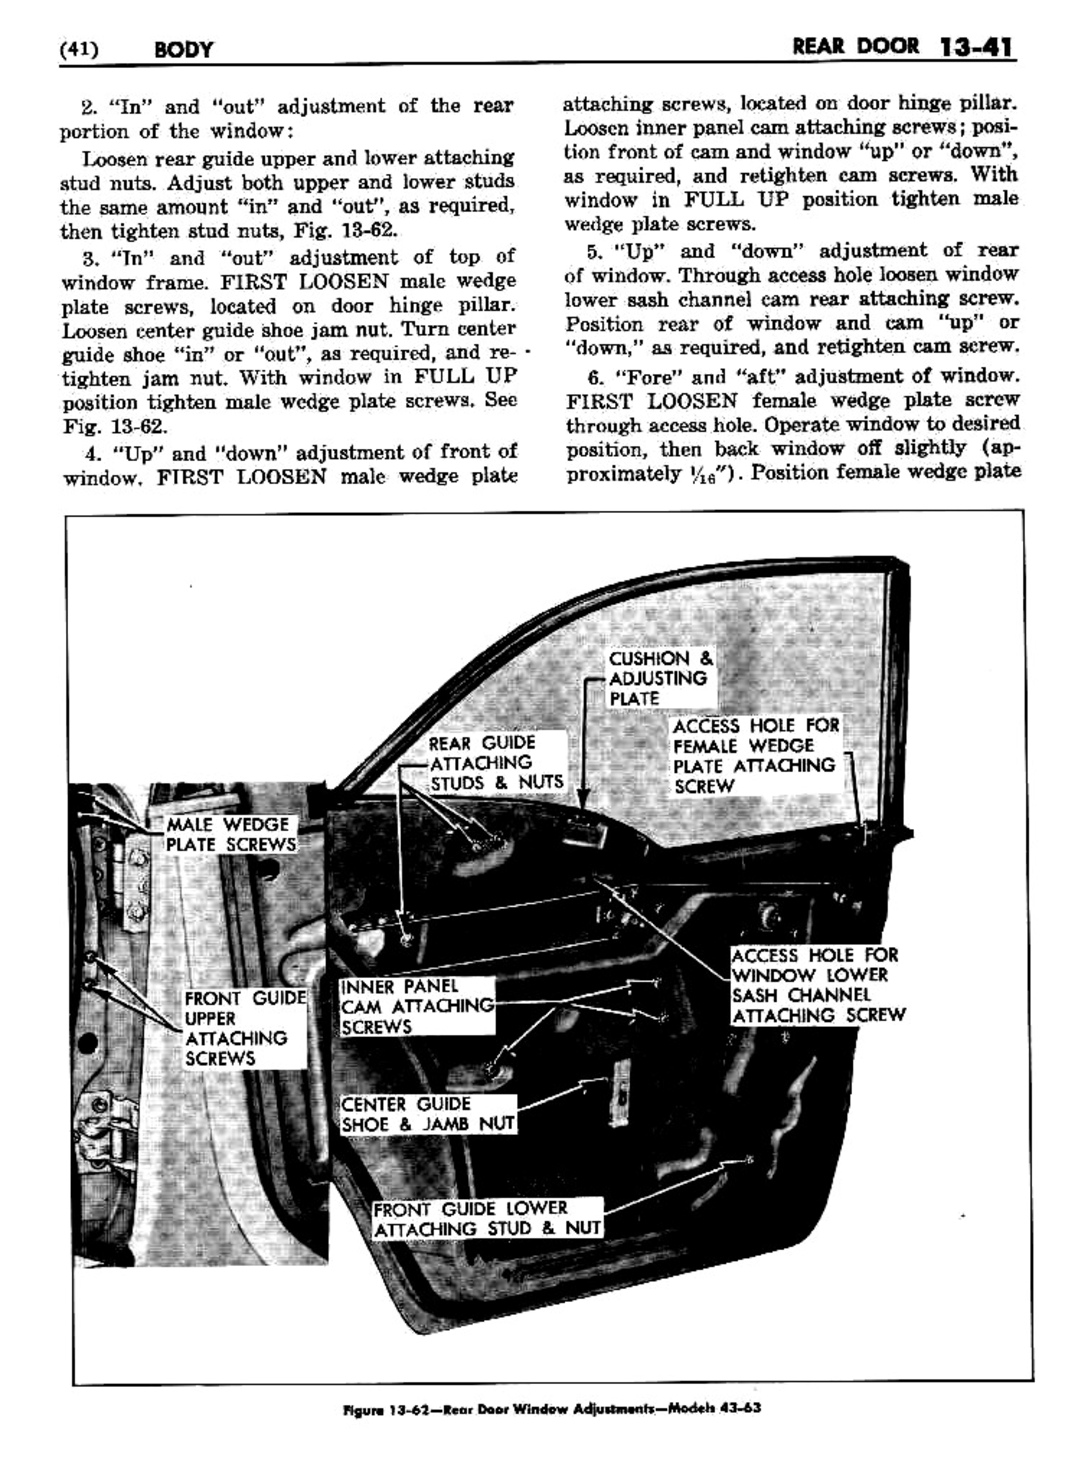 n_1957 Buick Body Service Manual-043-043.jpg